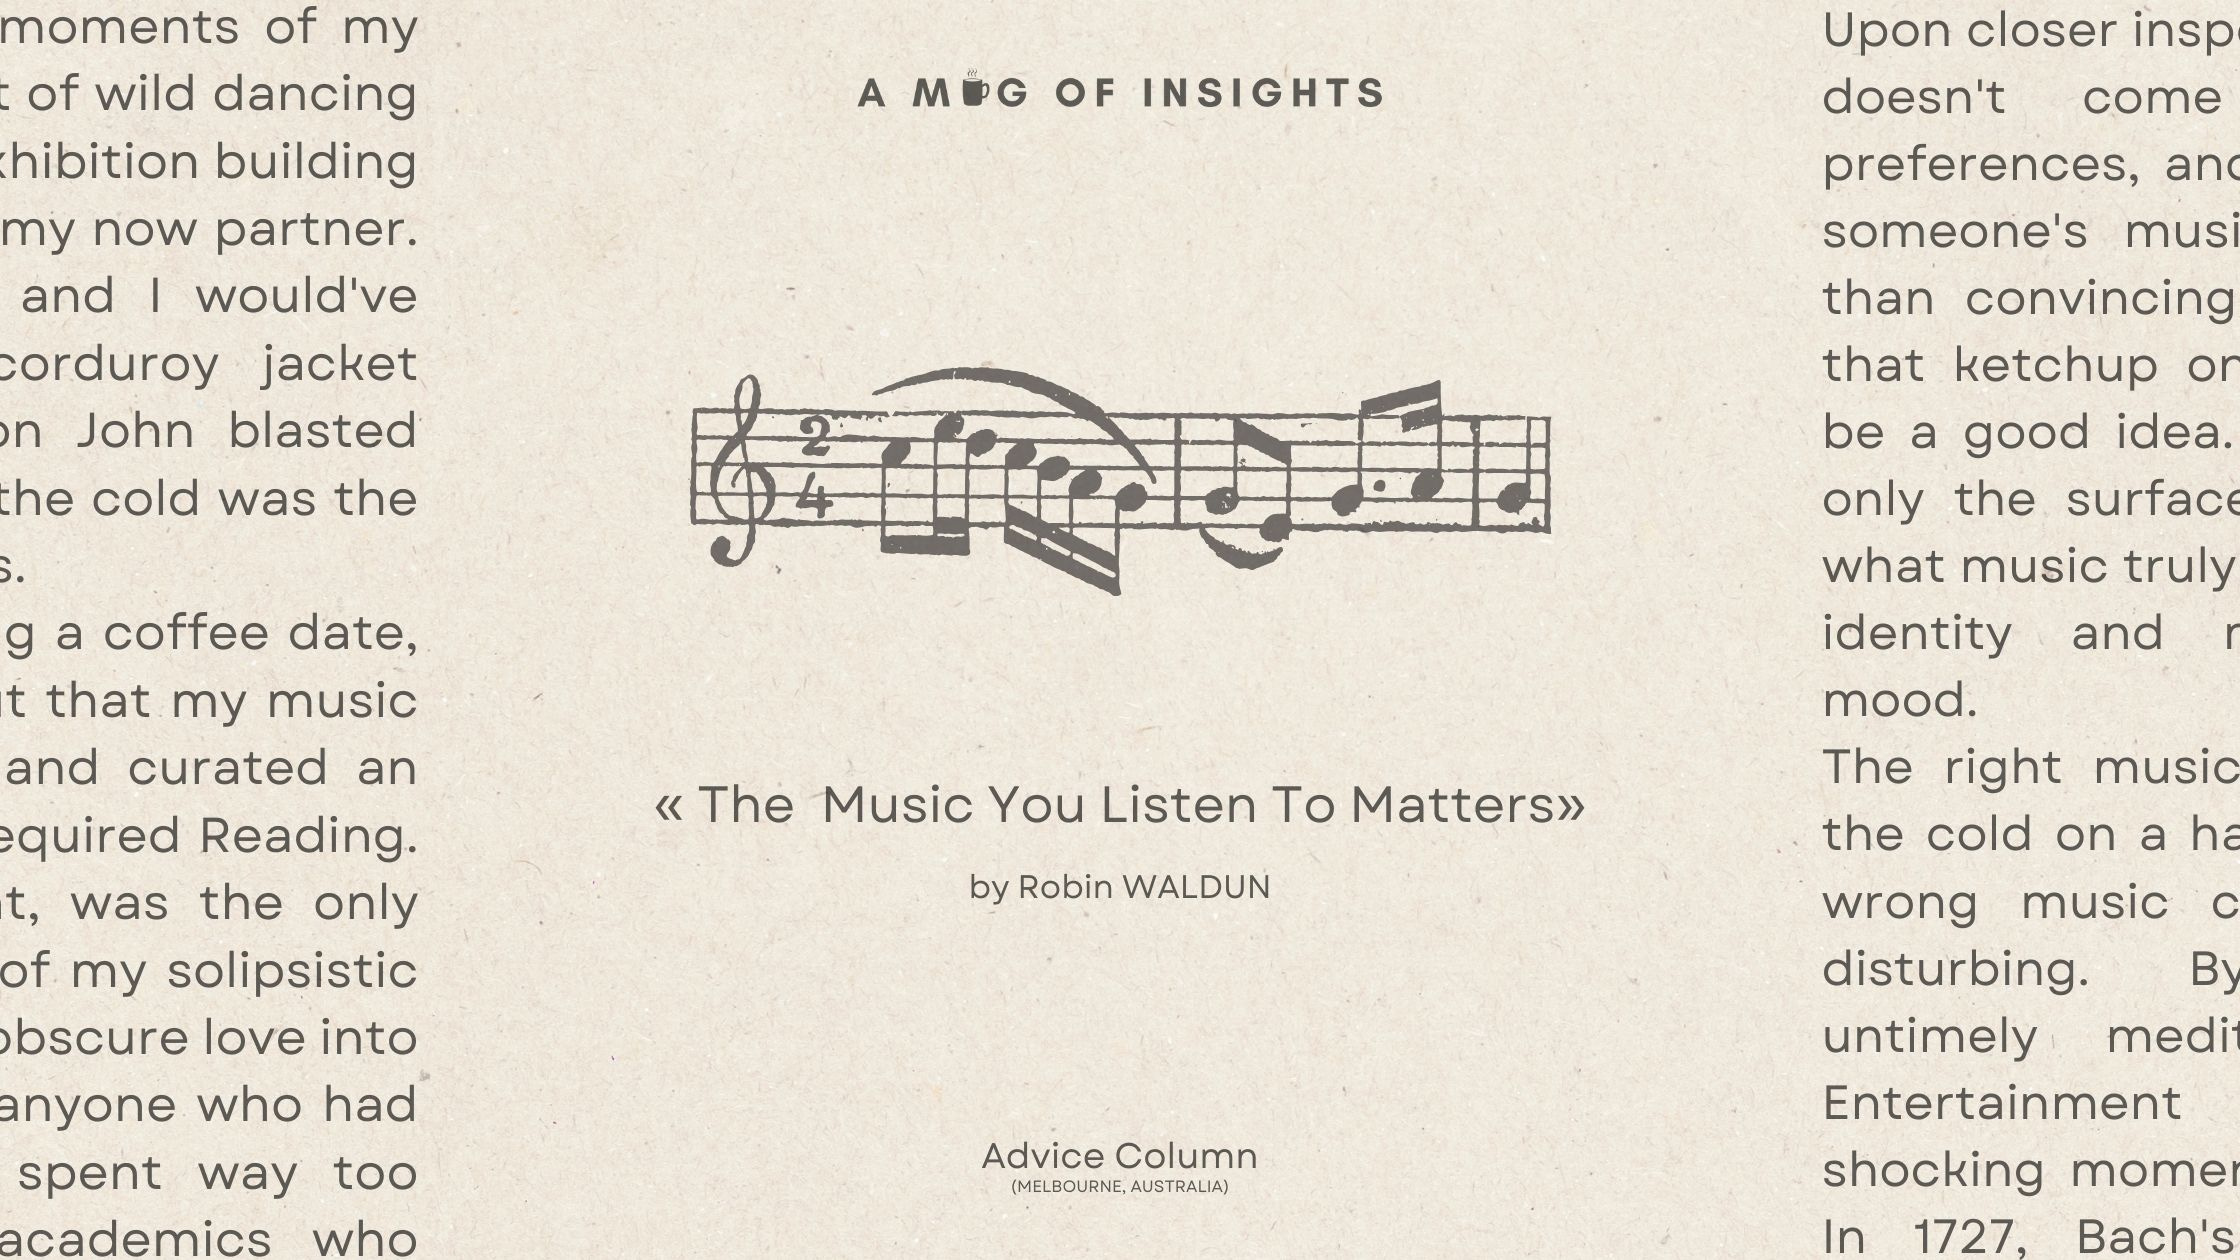 The Music You Listen To Matters - by Robin Waldun